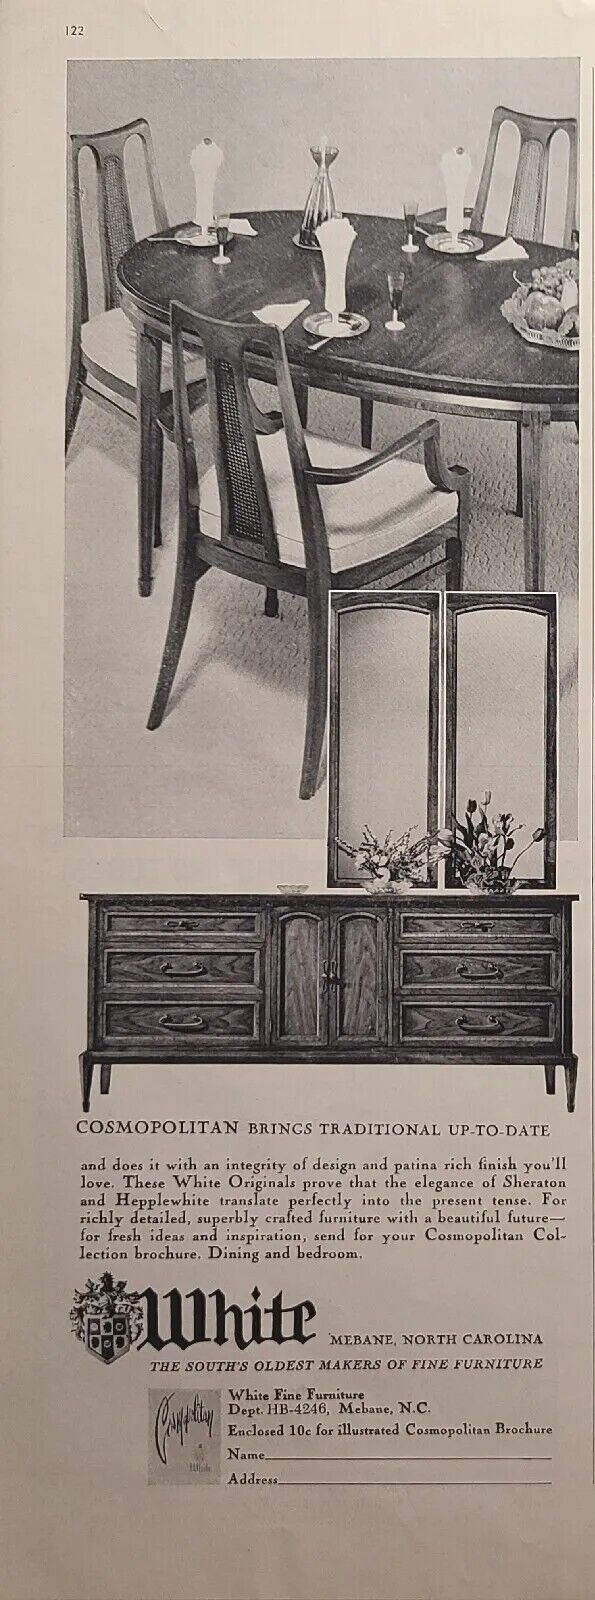 White Fine Furniture Mebane NC Cosmopolitan Collection Vintage Print Ad 1964